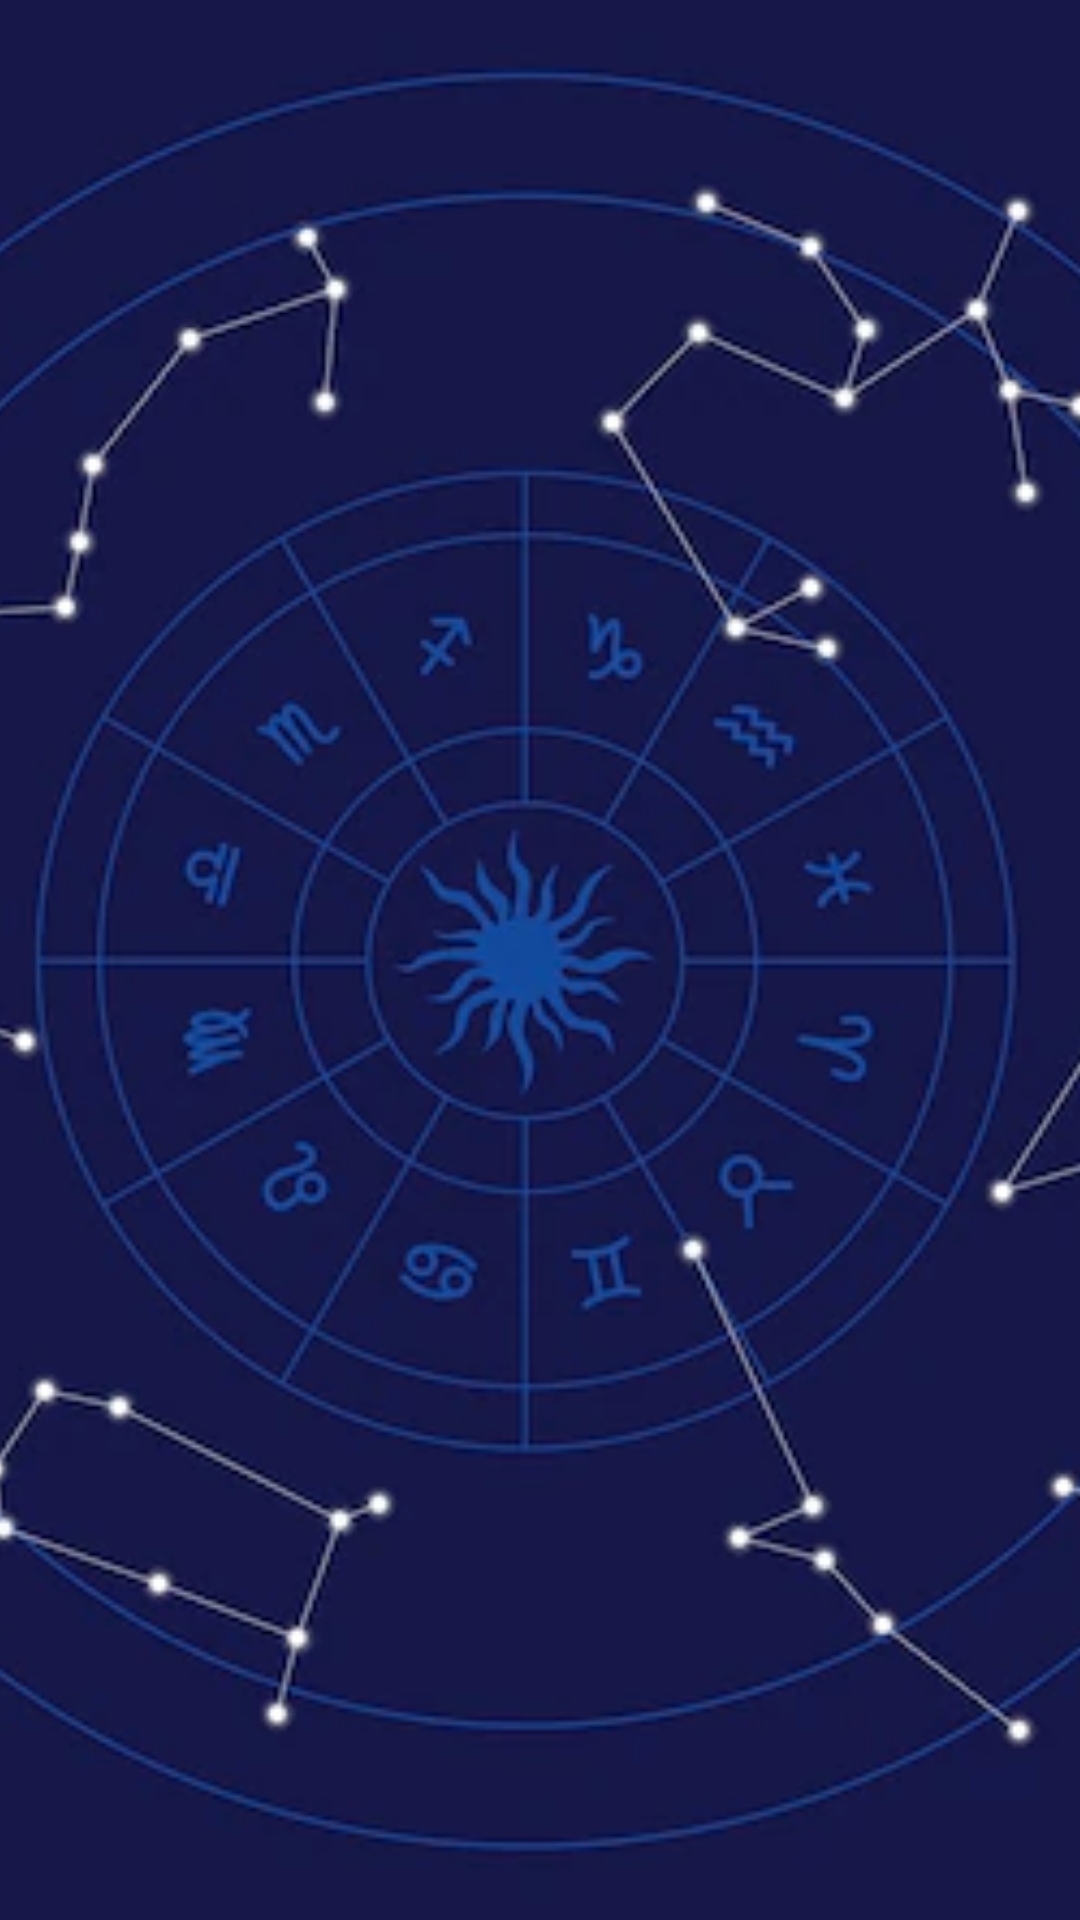 Horoscope Today, November 14: Good day for Leo, Virgo, Gemini; Aquarius needs to be careful